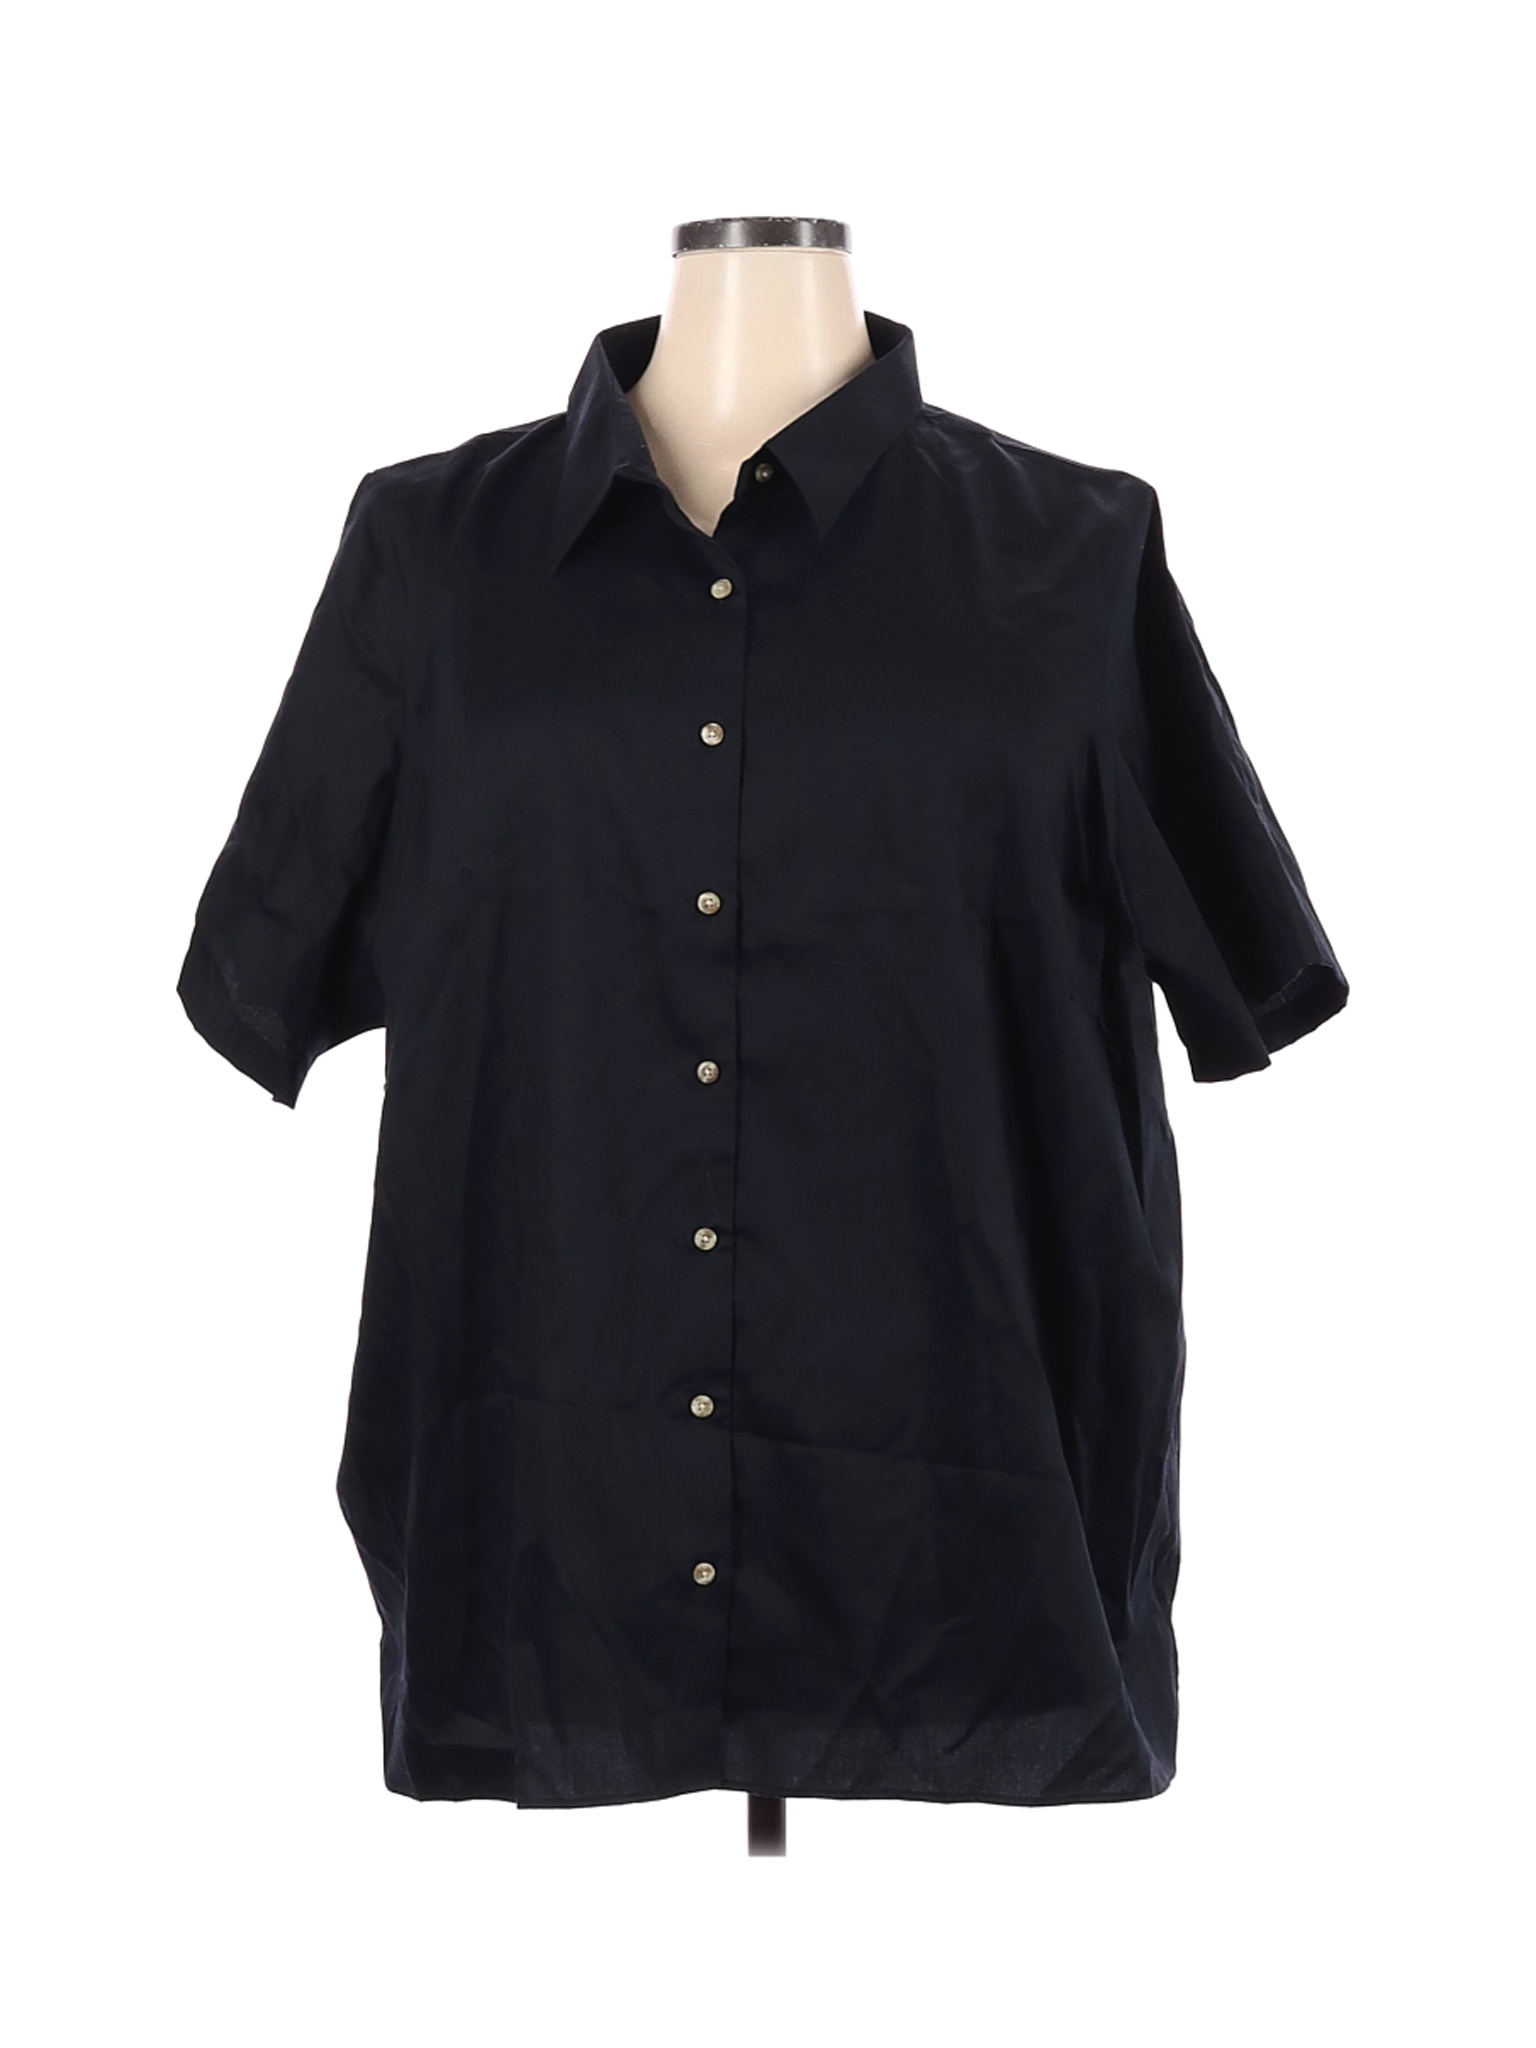 Lands' End Women Black Short Sleeve Button-Down Shirt 4X Plus | eBay